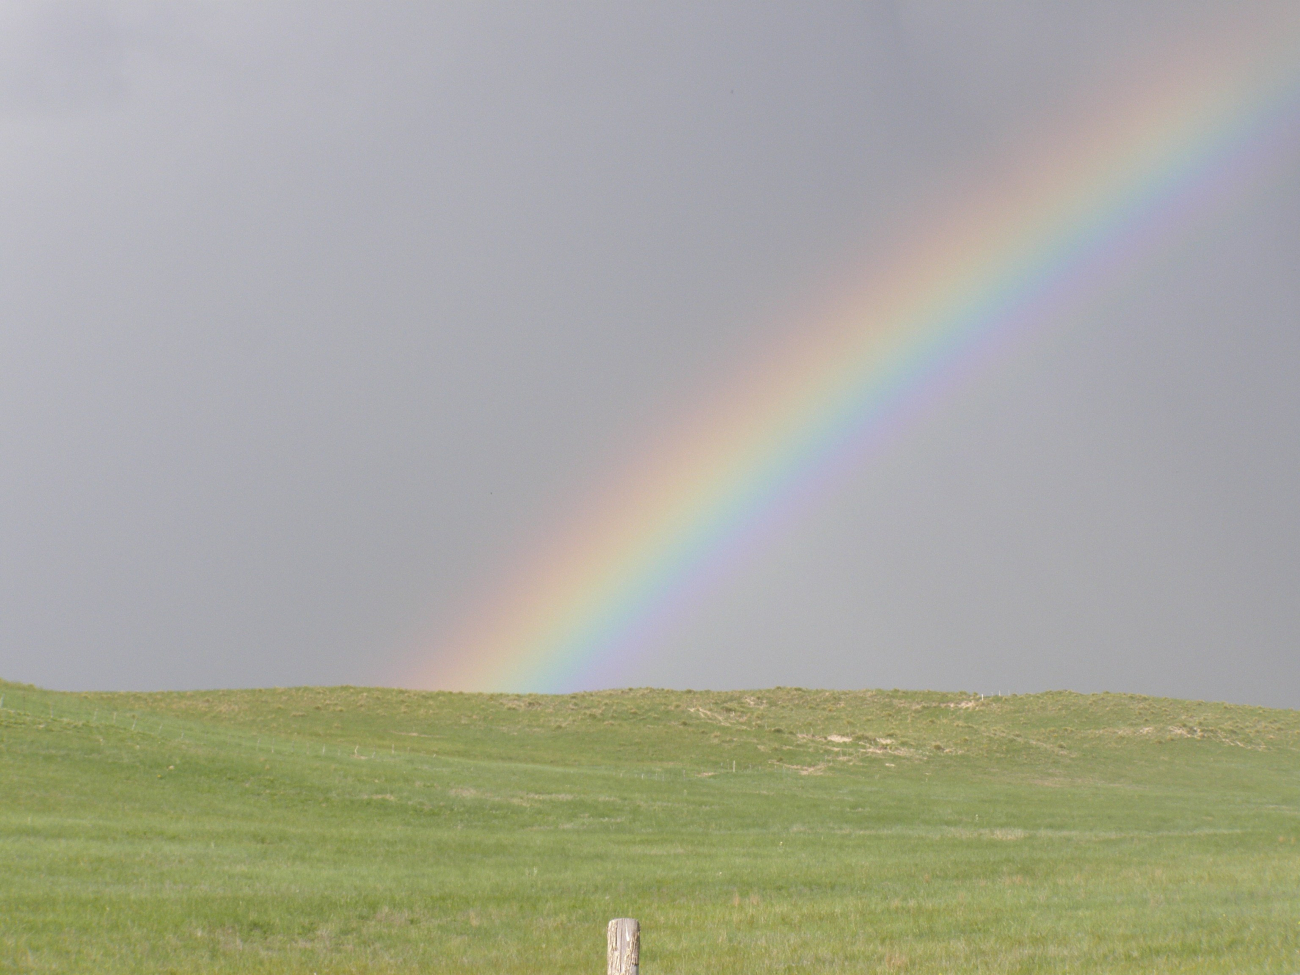 A beautiful rainbow following passage of a storm